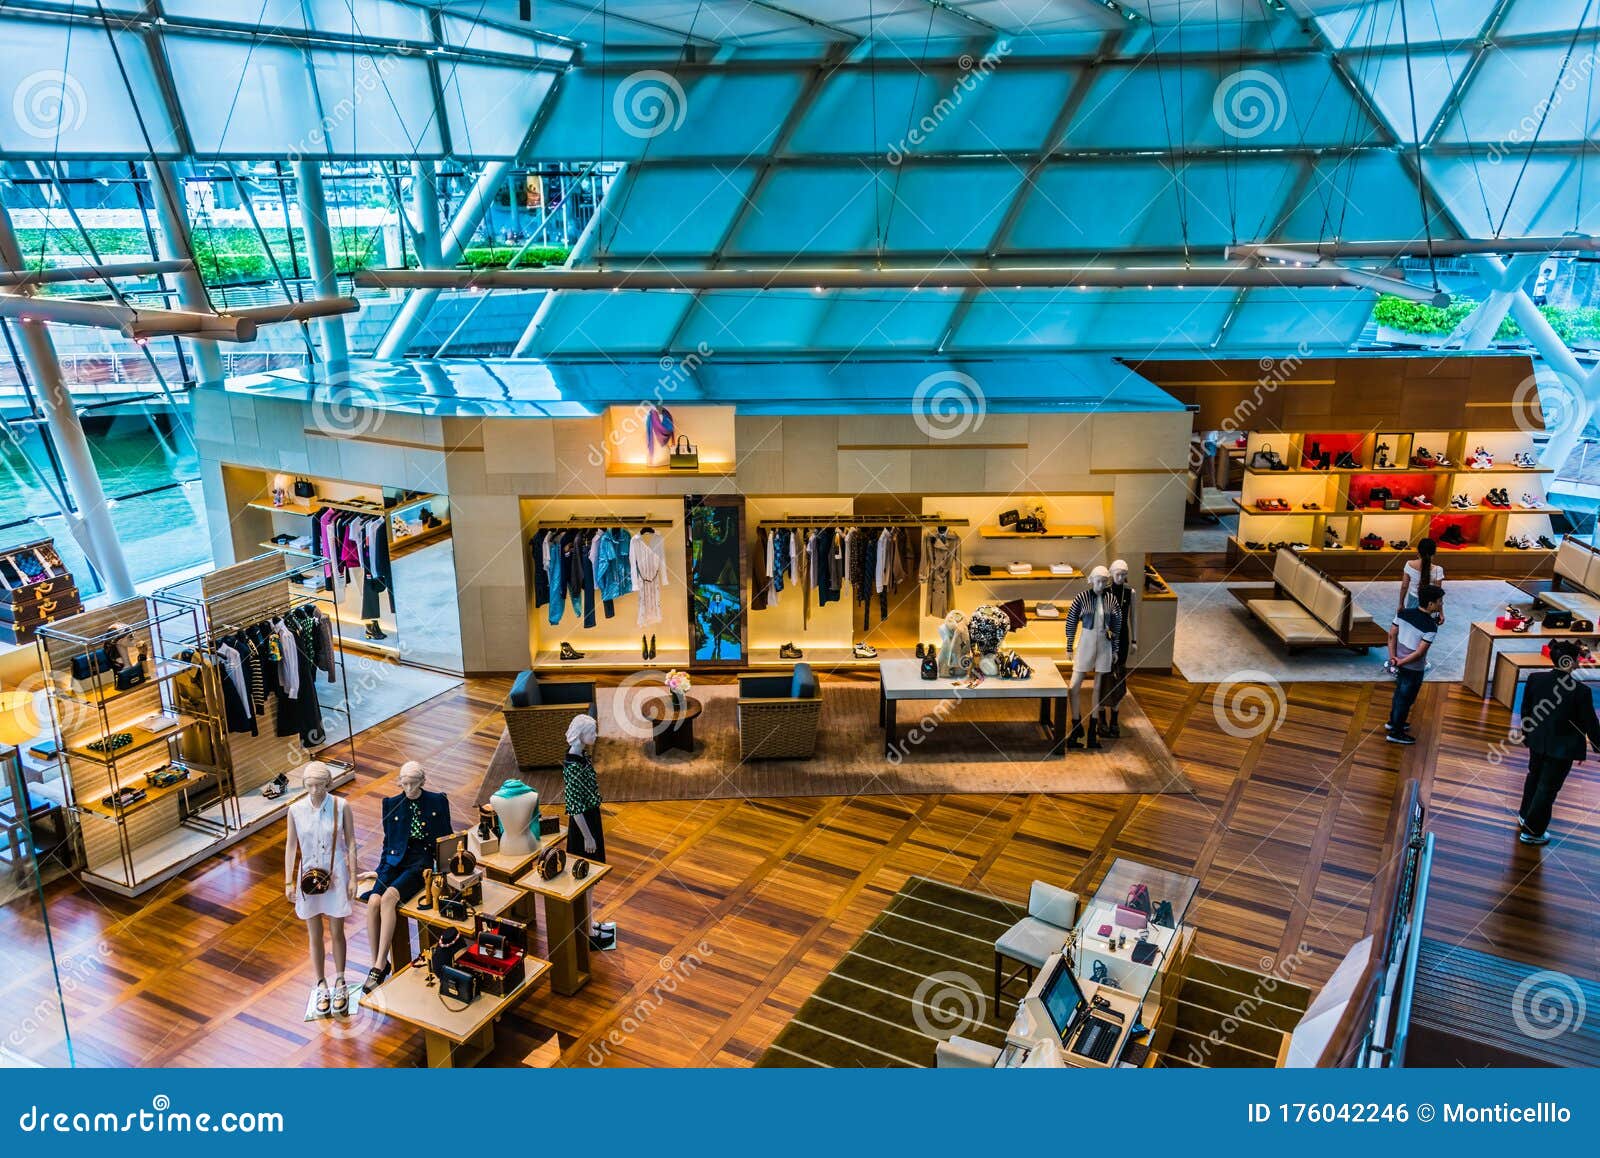 Louis Vuitton Store at Marina Bay Sands  Marina bay sands, Marina bay,  Instagram